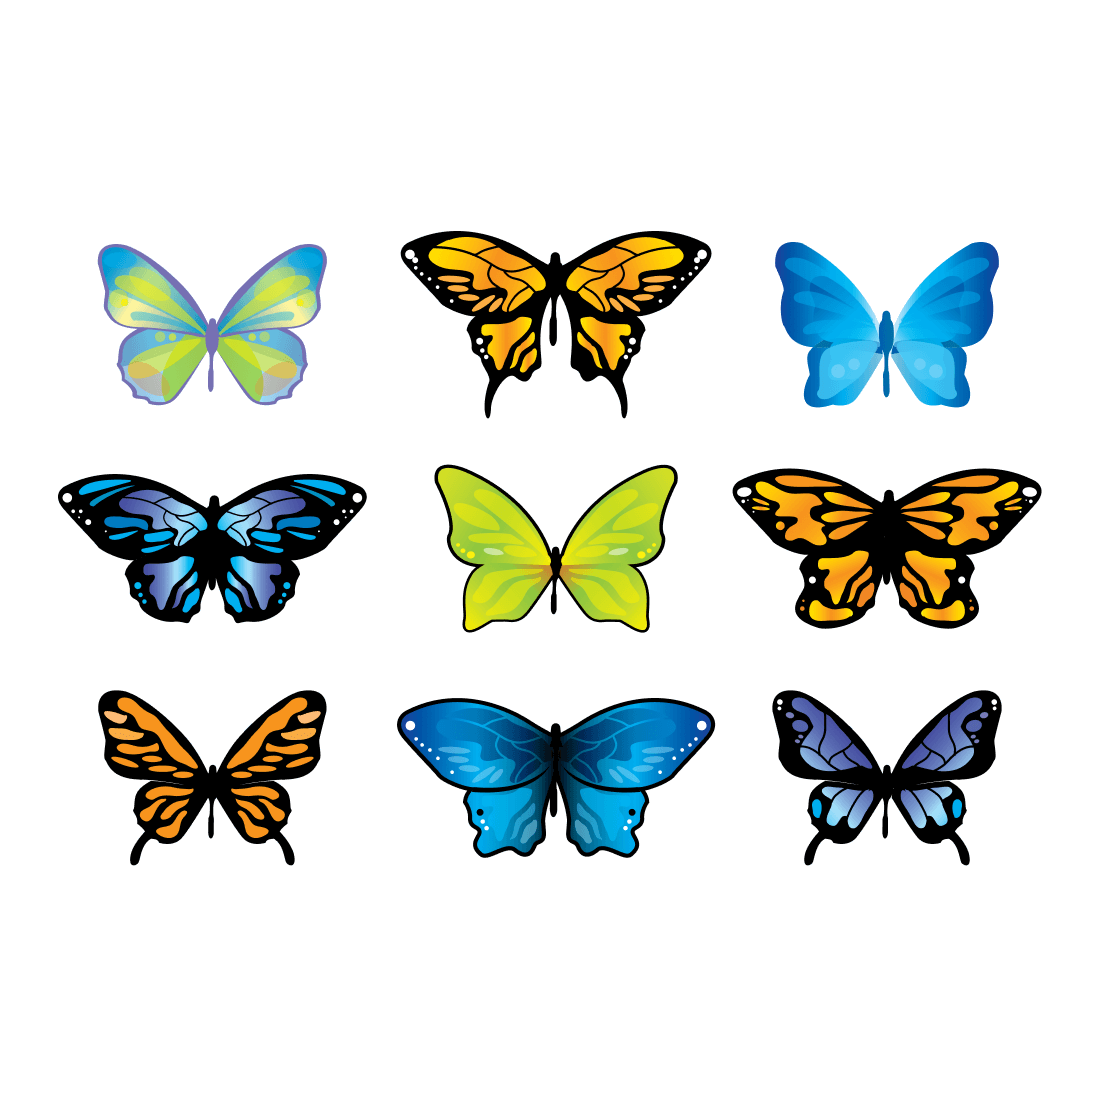 Blue, orange and green butterflies.